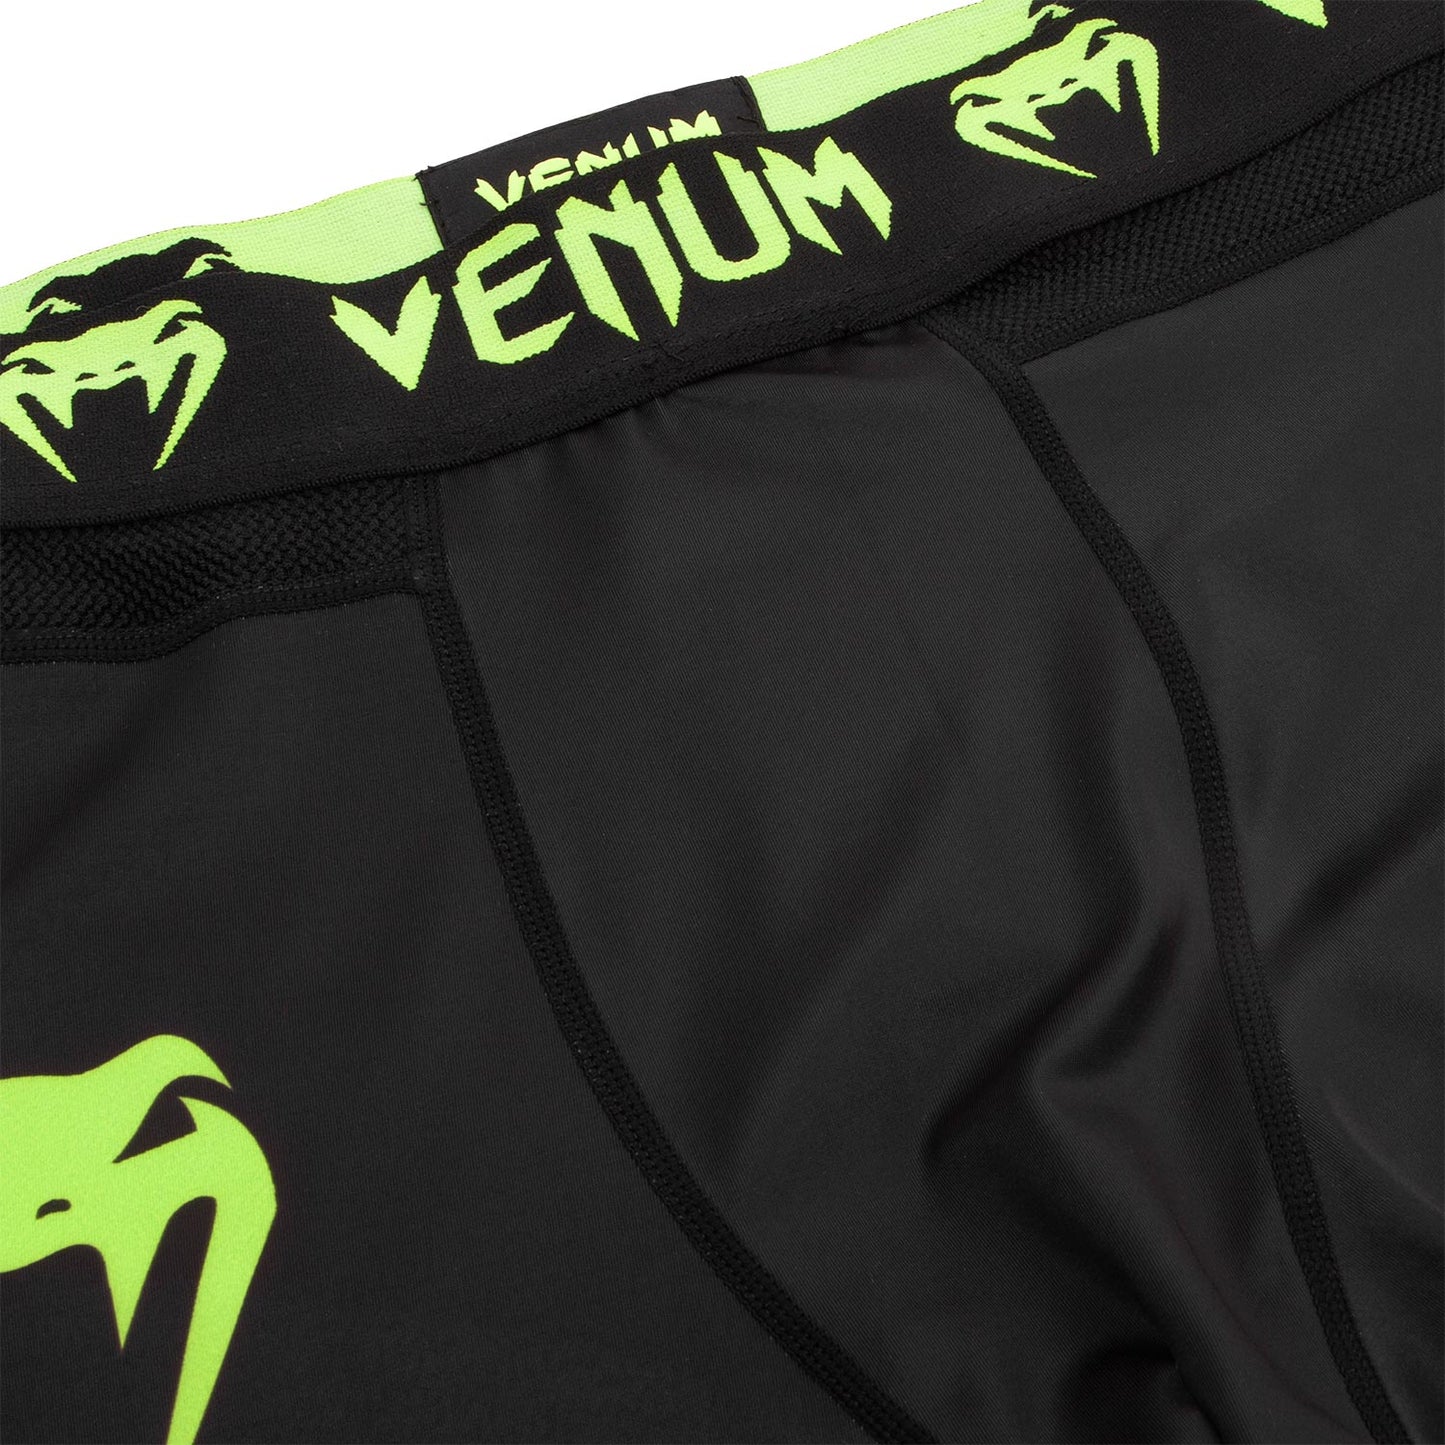 Venum Logos Tights - Black/Neo Yellow